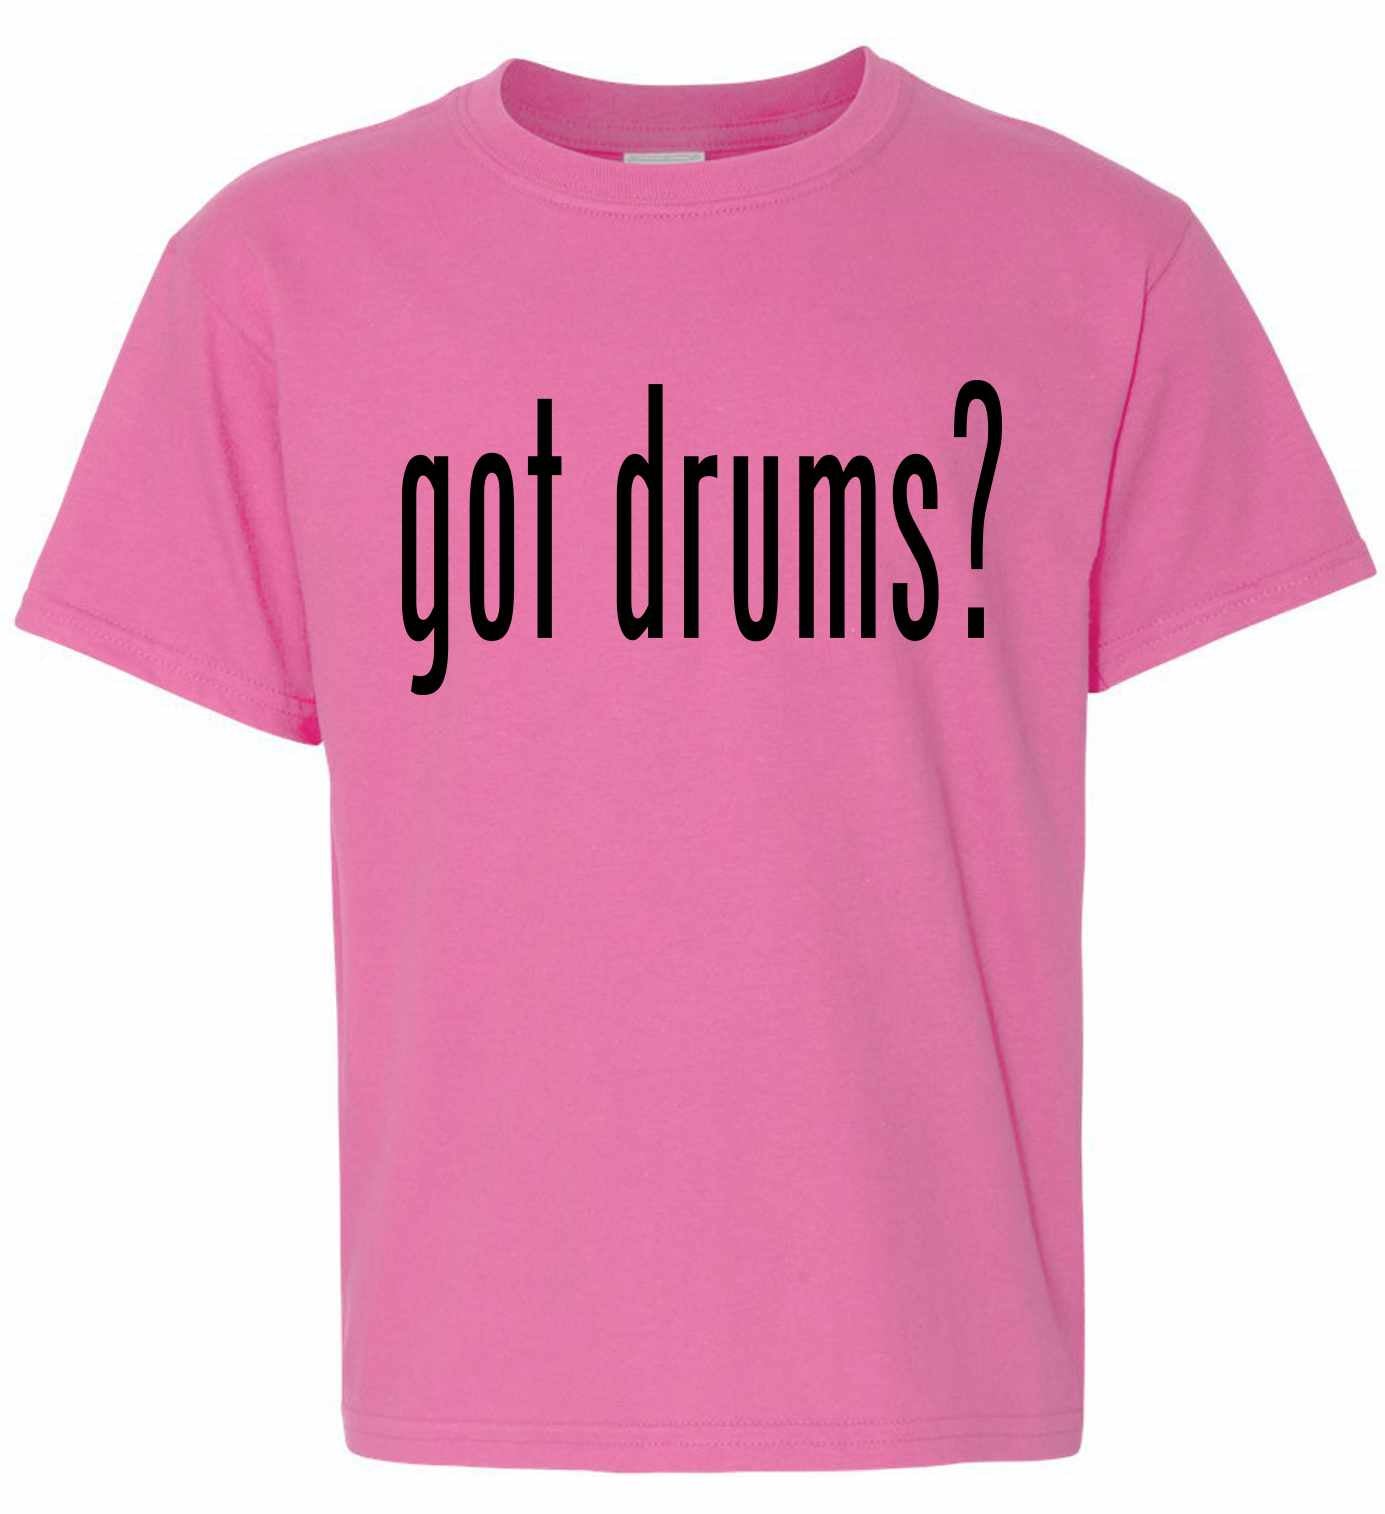 Got Drums? on Kids T-Shirt (#889-201)